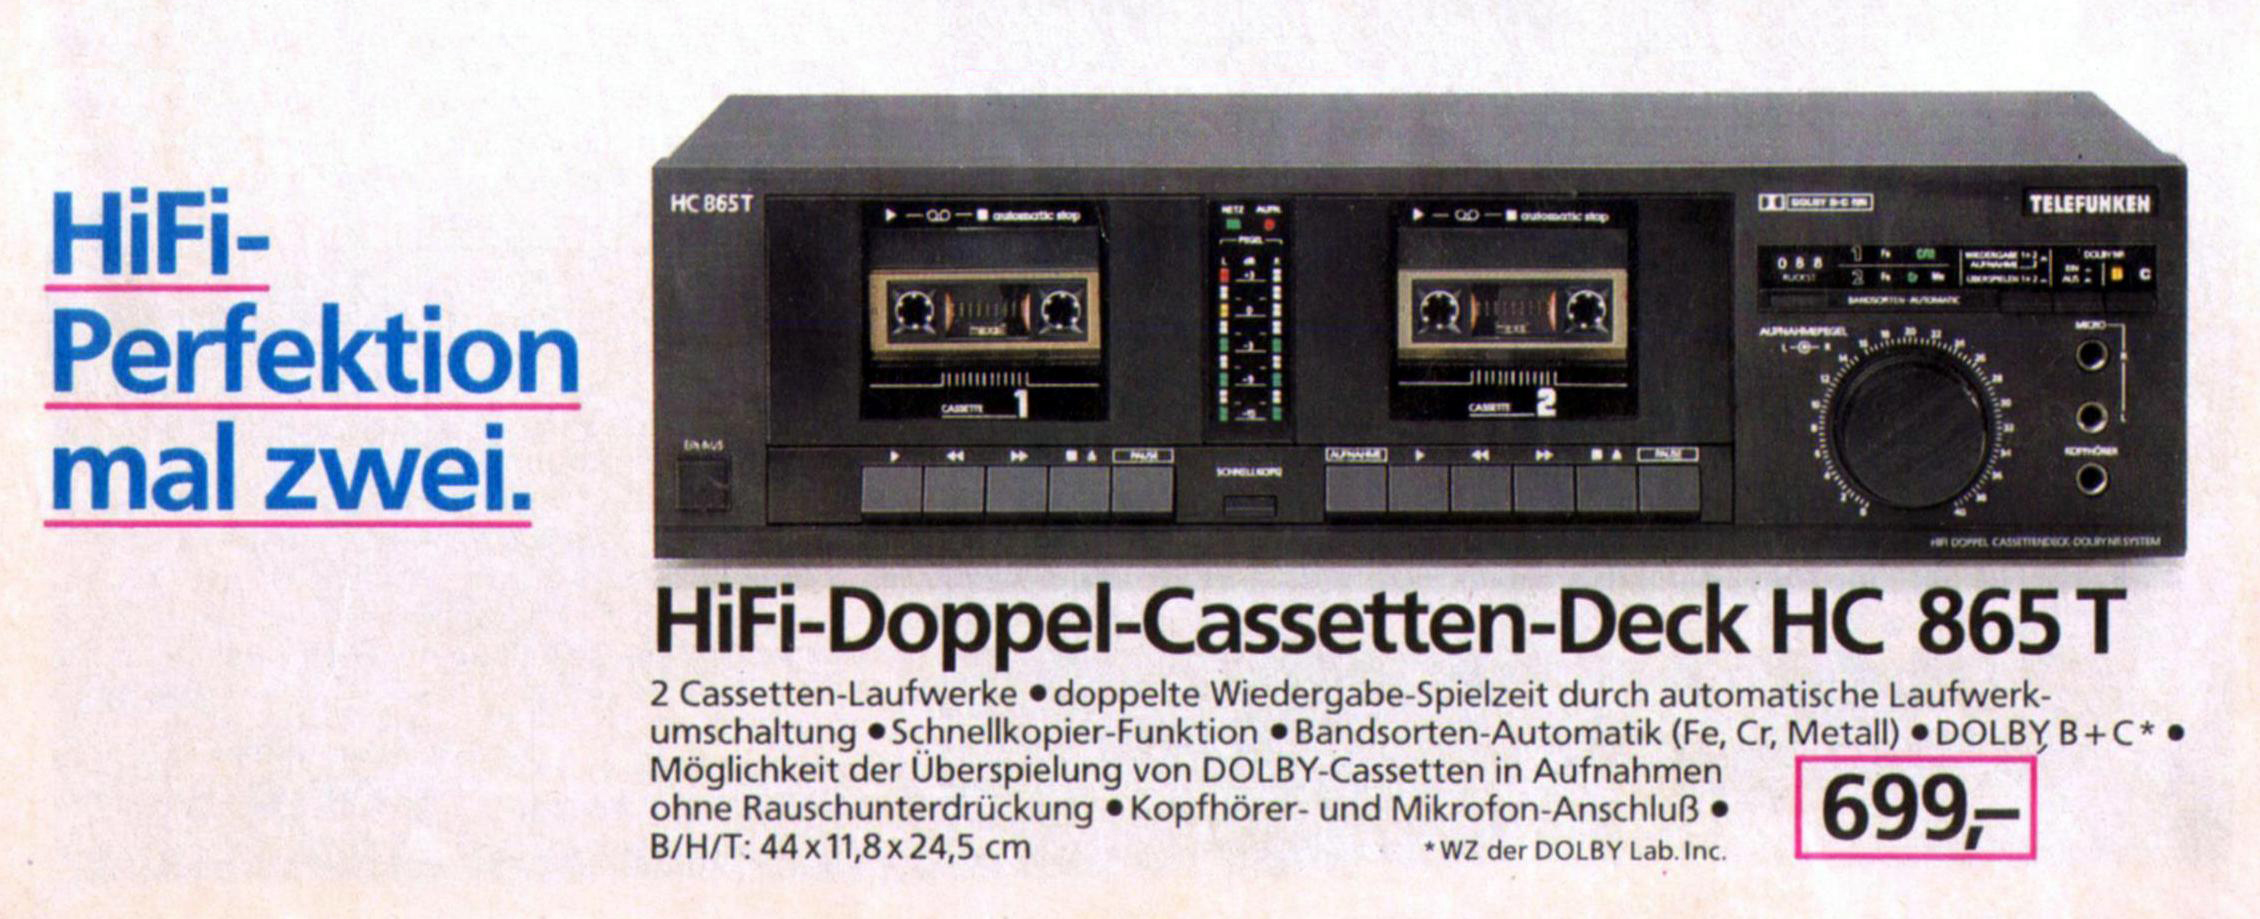 Telefunken HC 865 T-Prospekt-1987.jpg